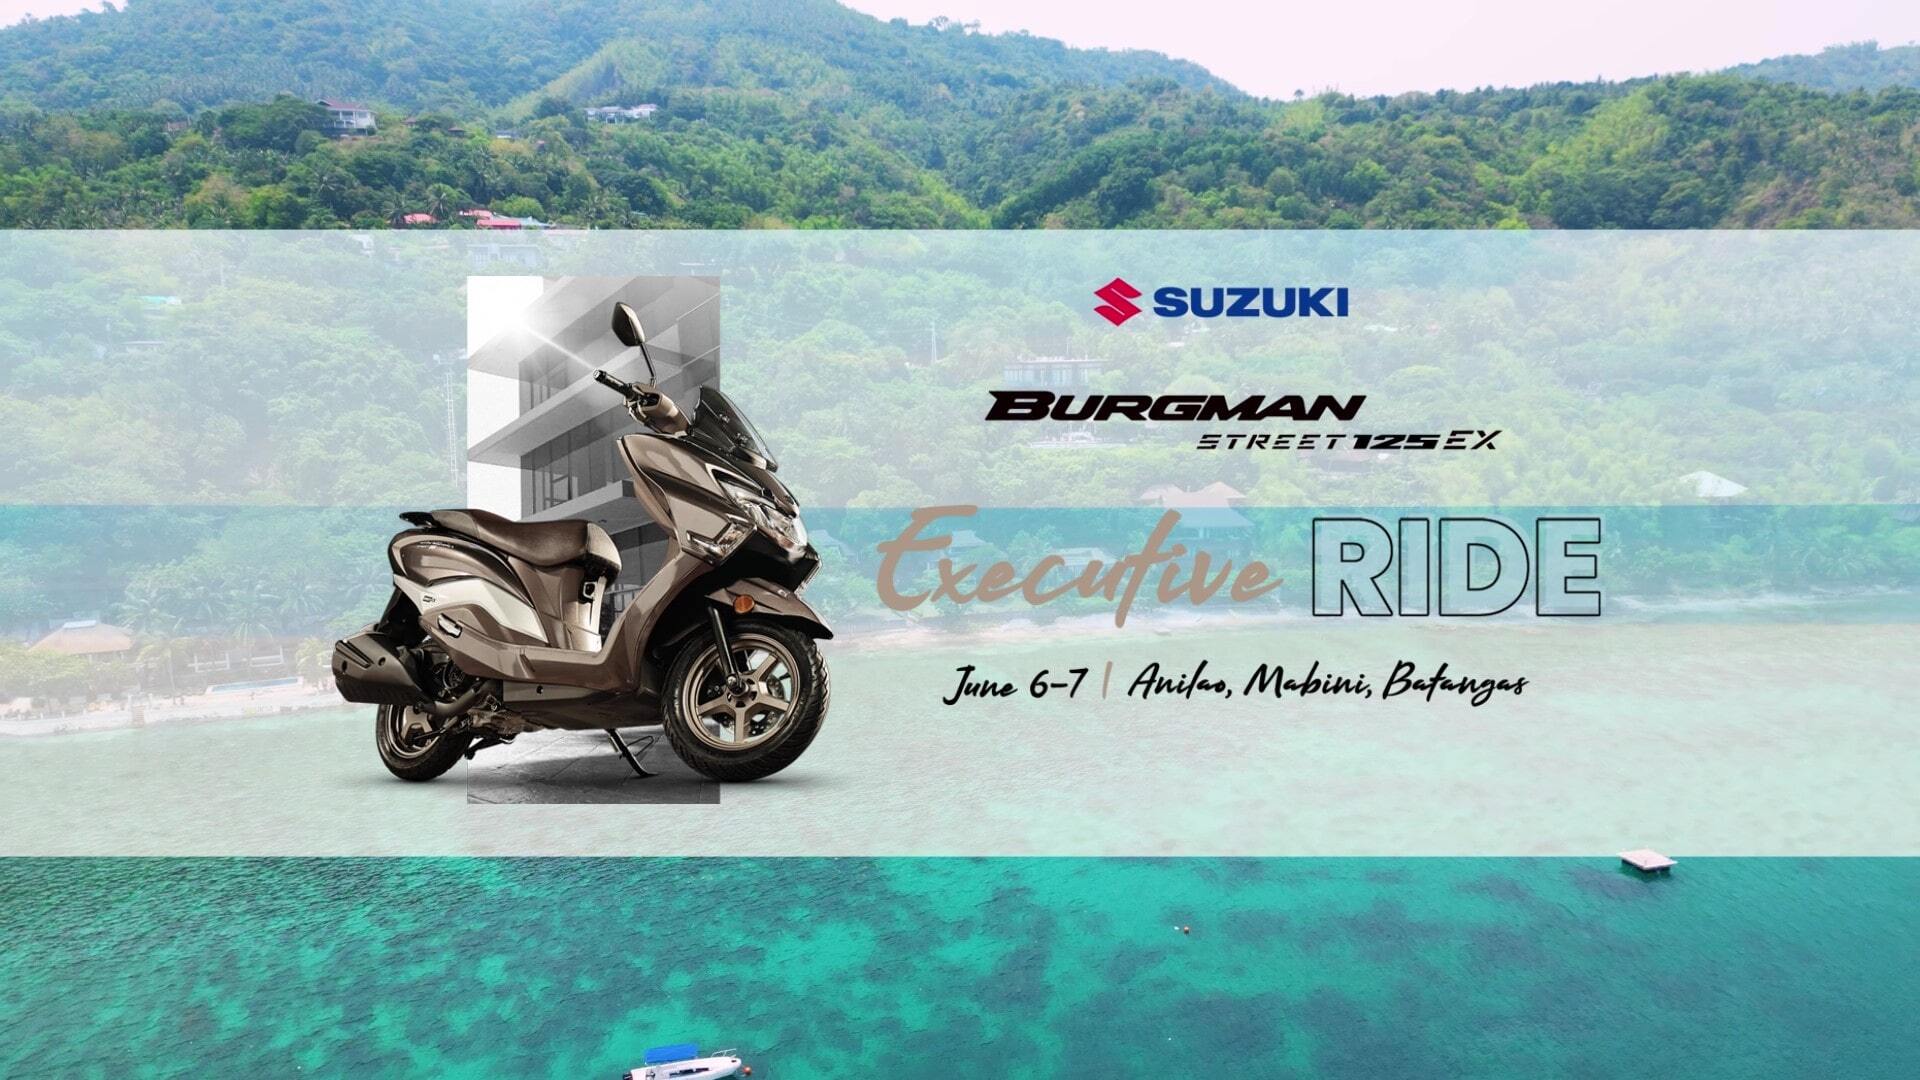 Suzuki Burgman Street EXecutive Ride_Moment-min